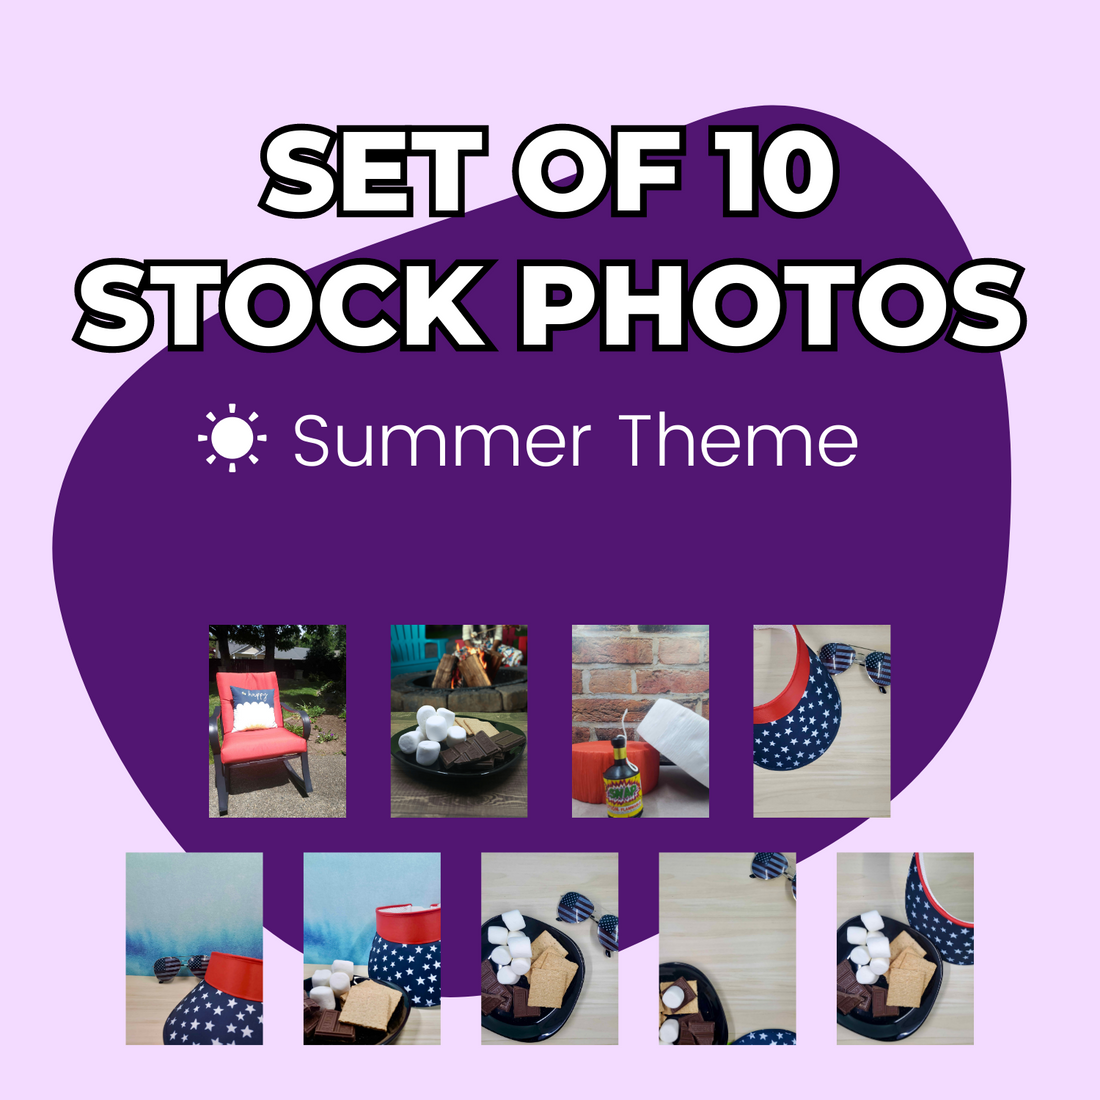 Summer Themed Stock Photos (set of 10)